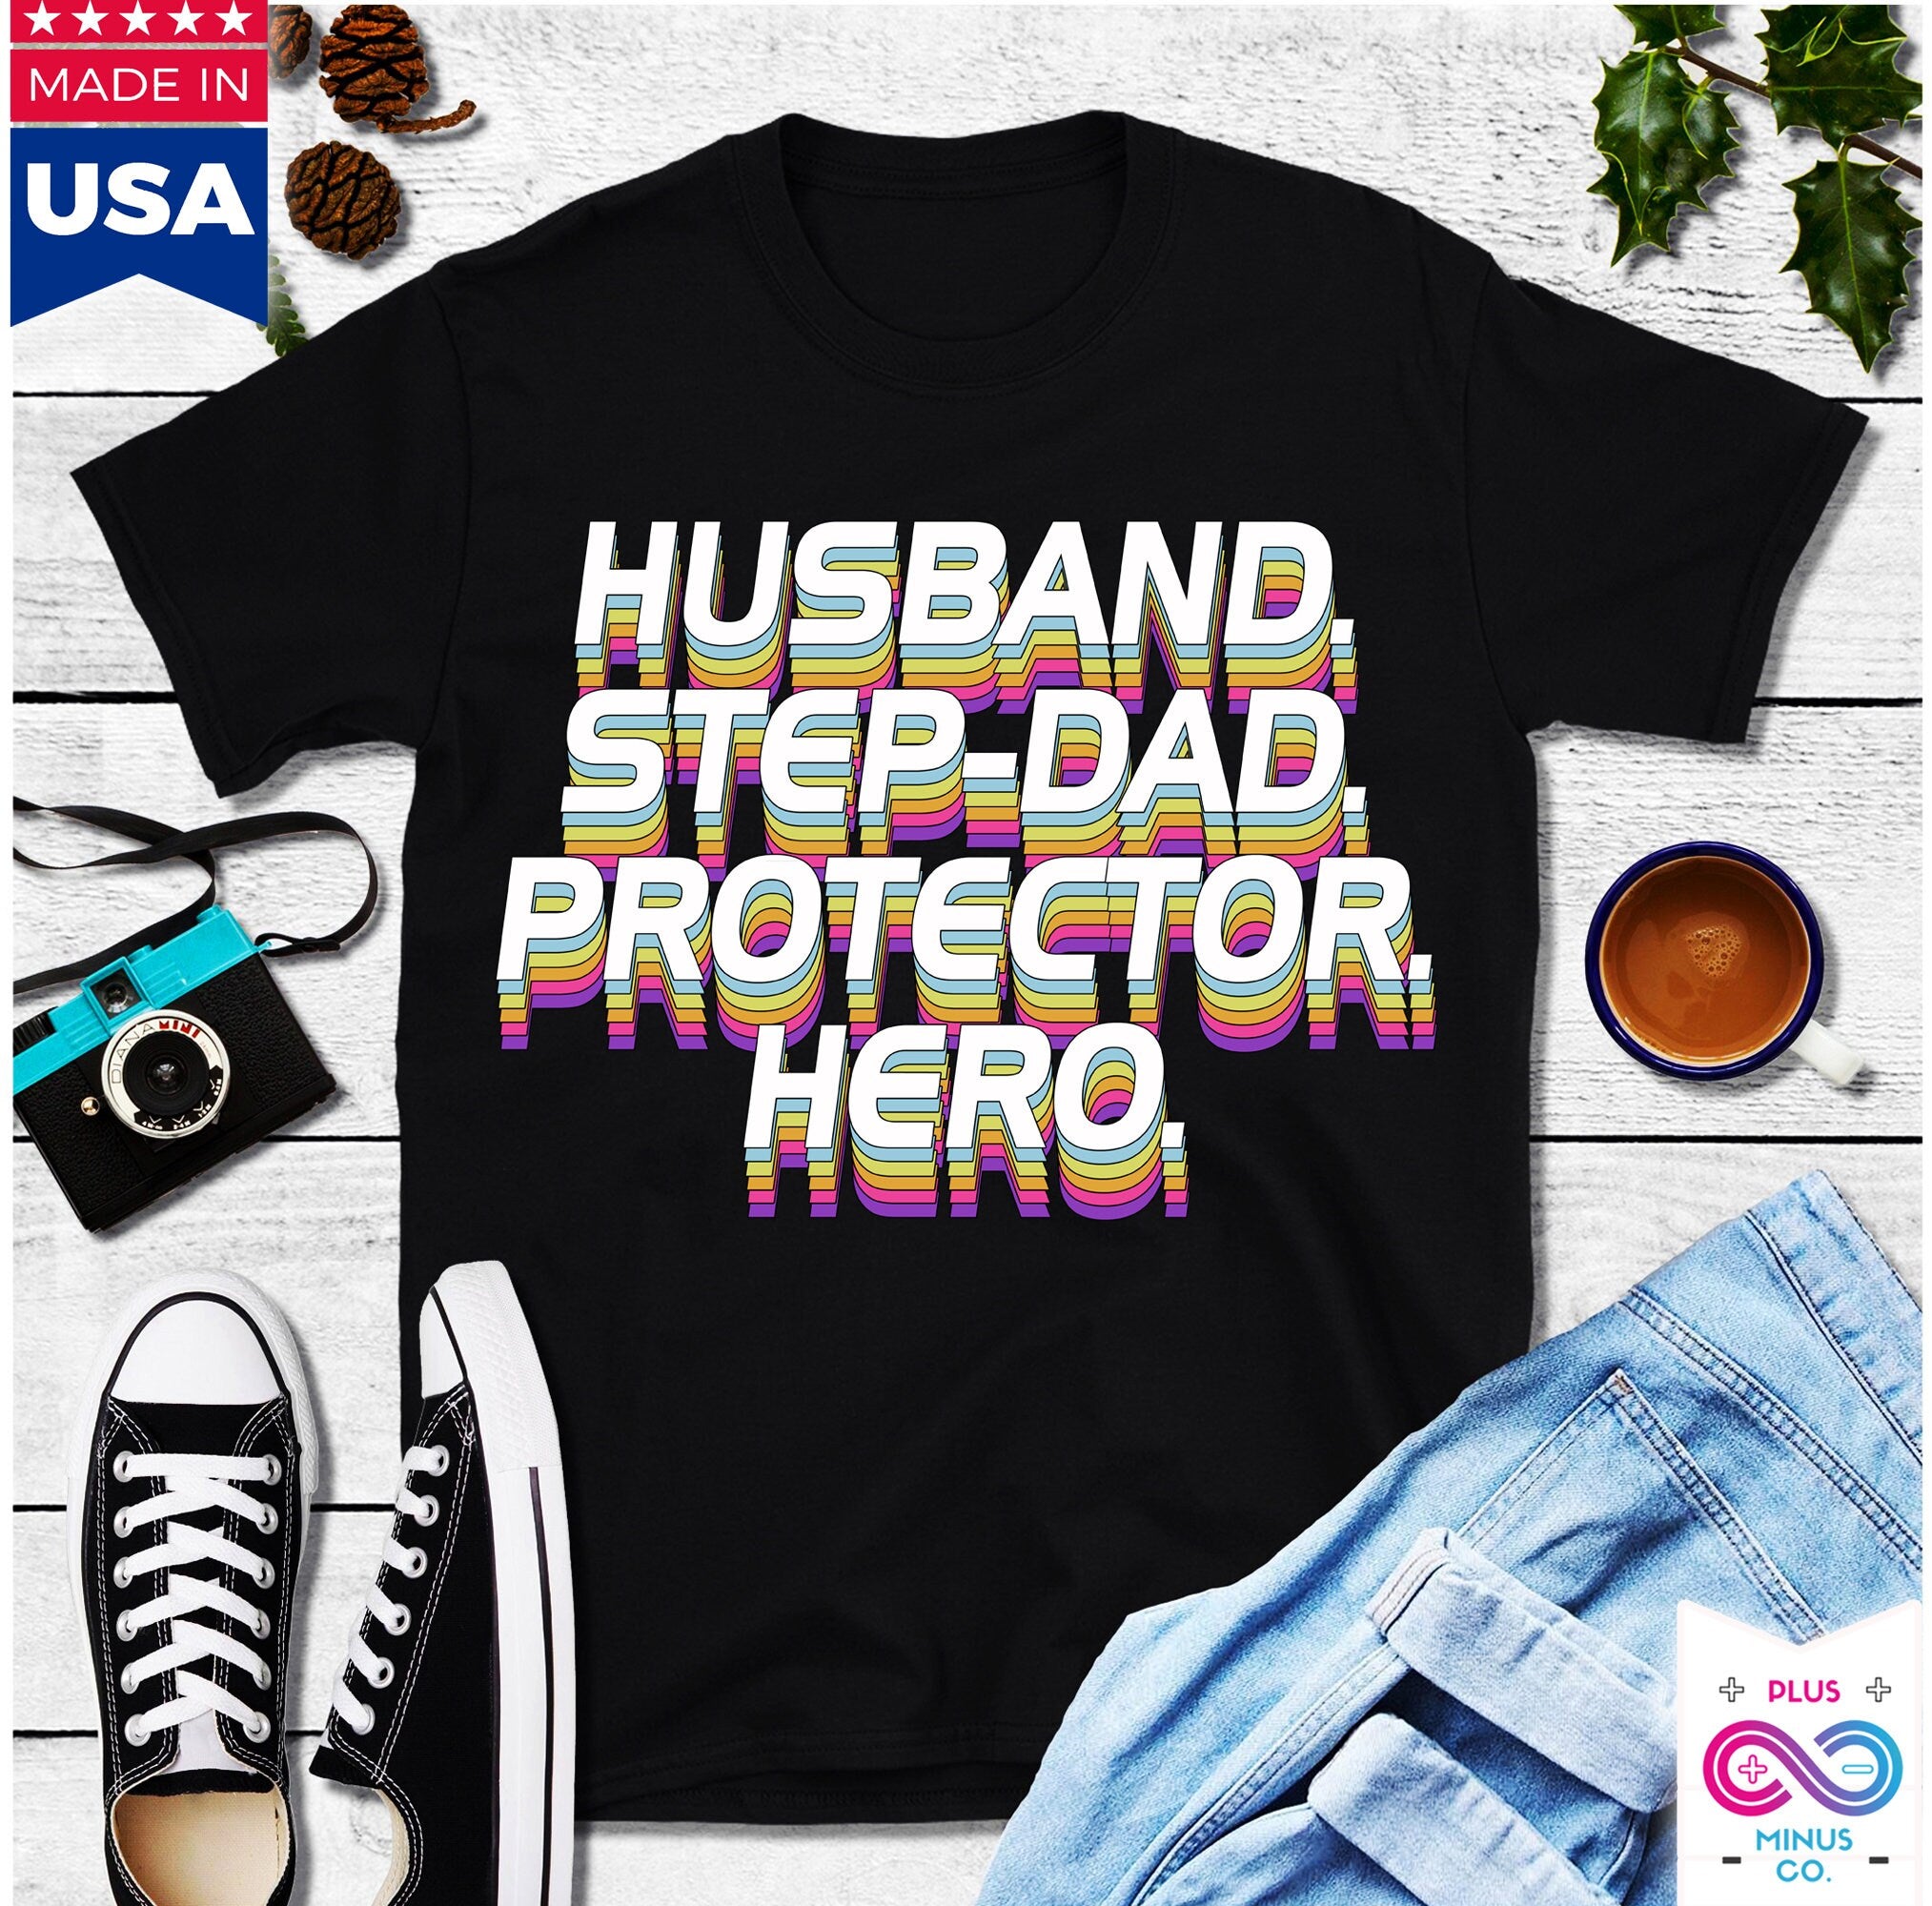 Man Daddy Protector Hero T-shirts, Vaderdagcadeau, Gepersonaliseerde Papa Shirt, Hero Shirt, Vaderdagcadeau, Papa Tshirt, Vaderdag Shirt - plusminusco.com